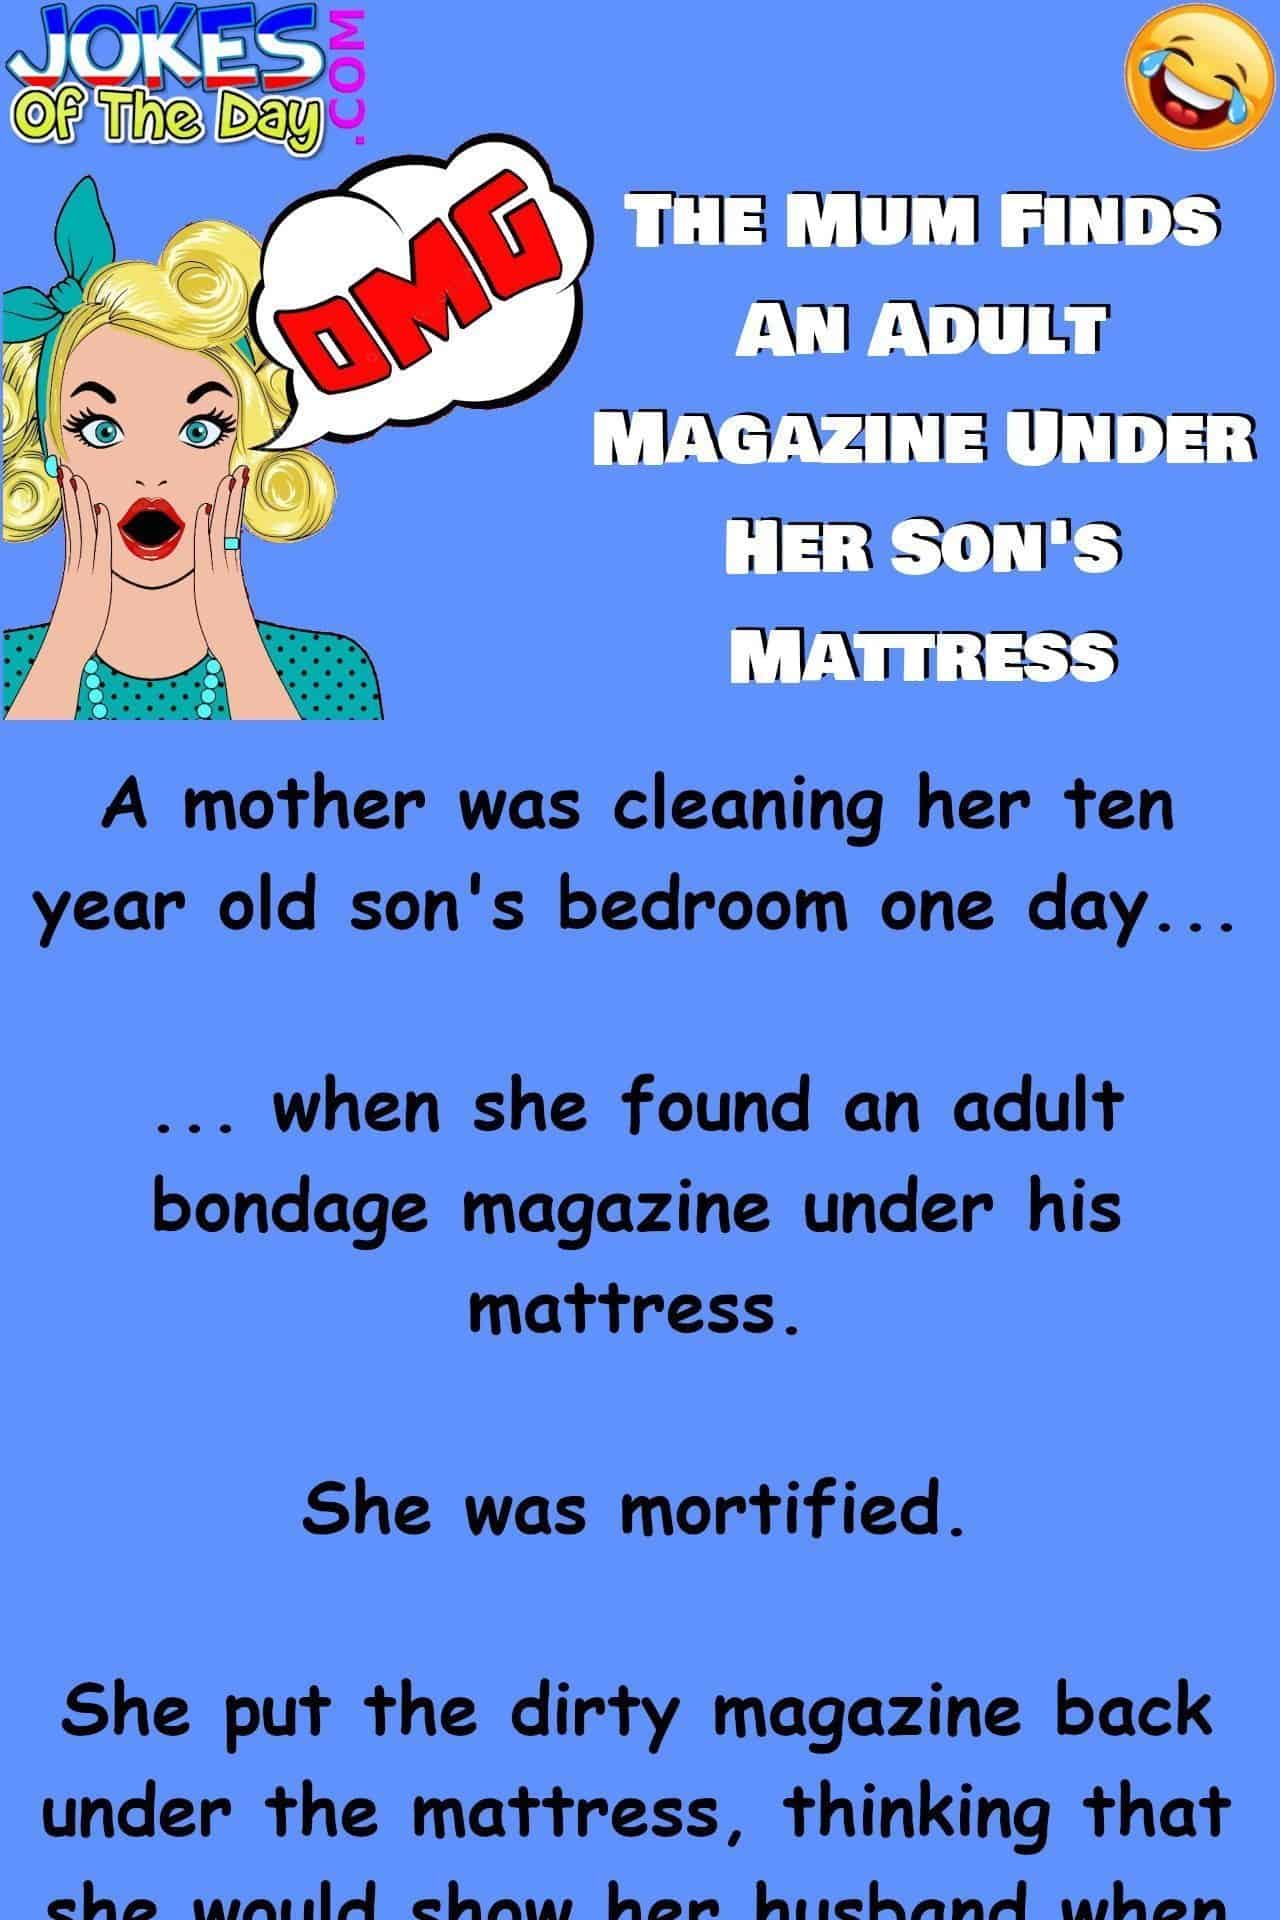 Funny Joke - The Mum Finds An Adult Magazine Under Her Son's Mattress - jokesoftheday com